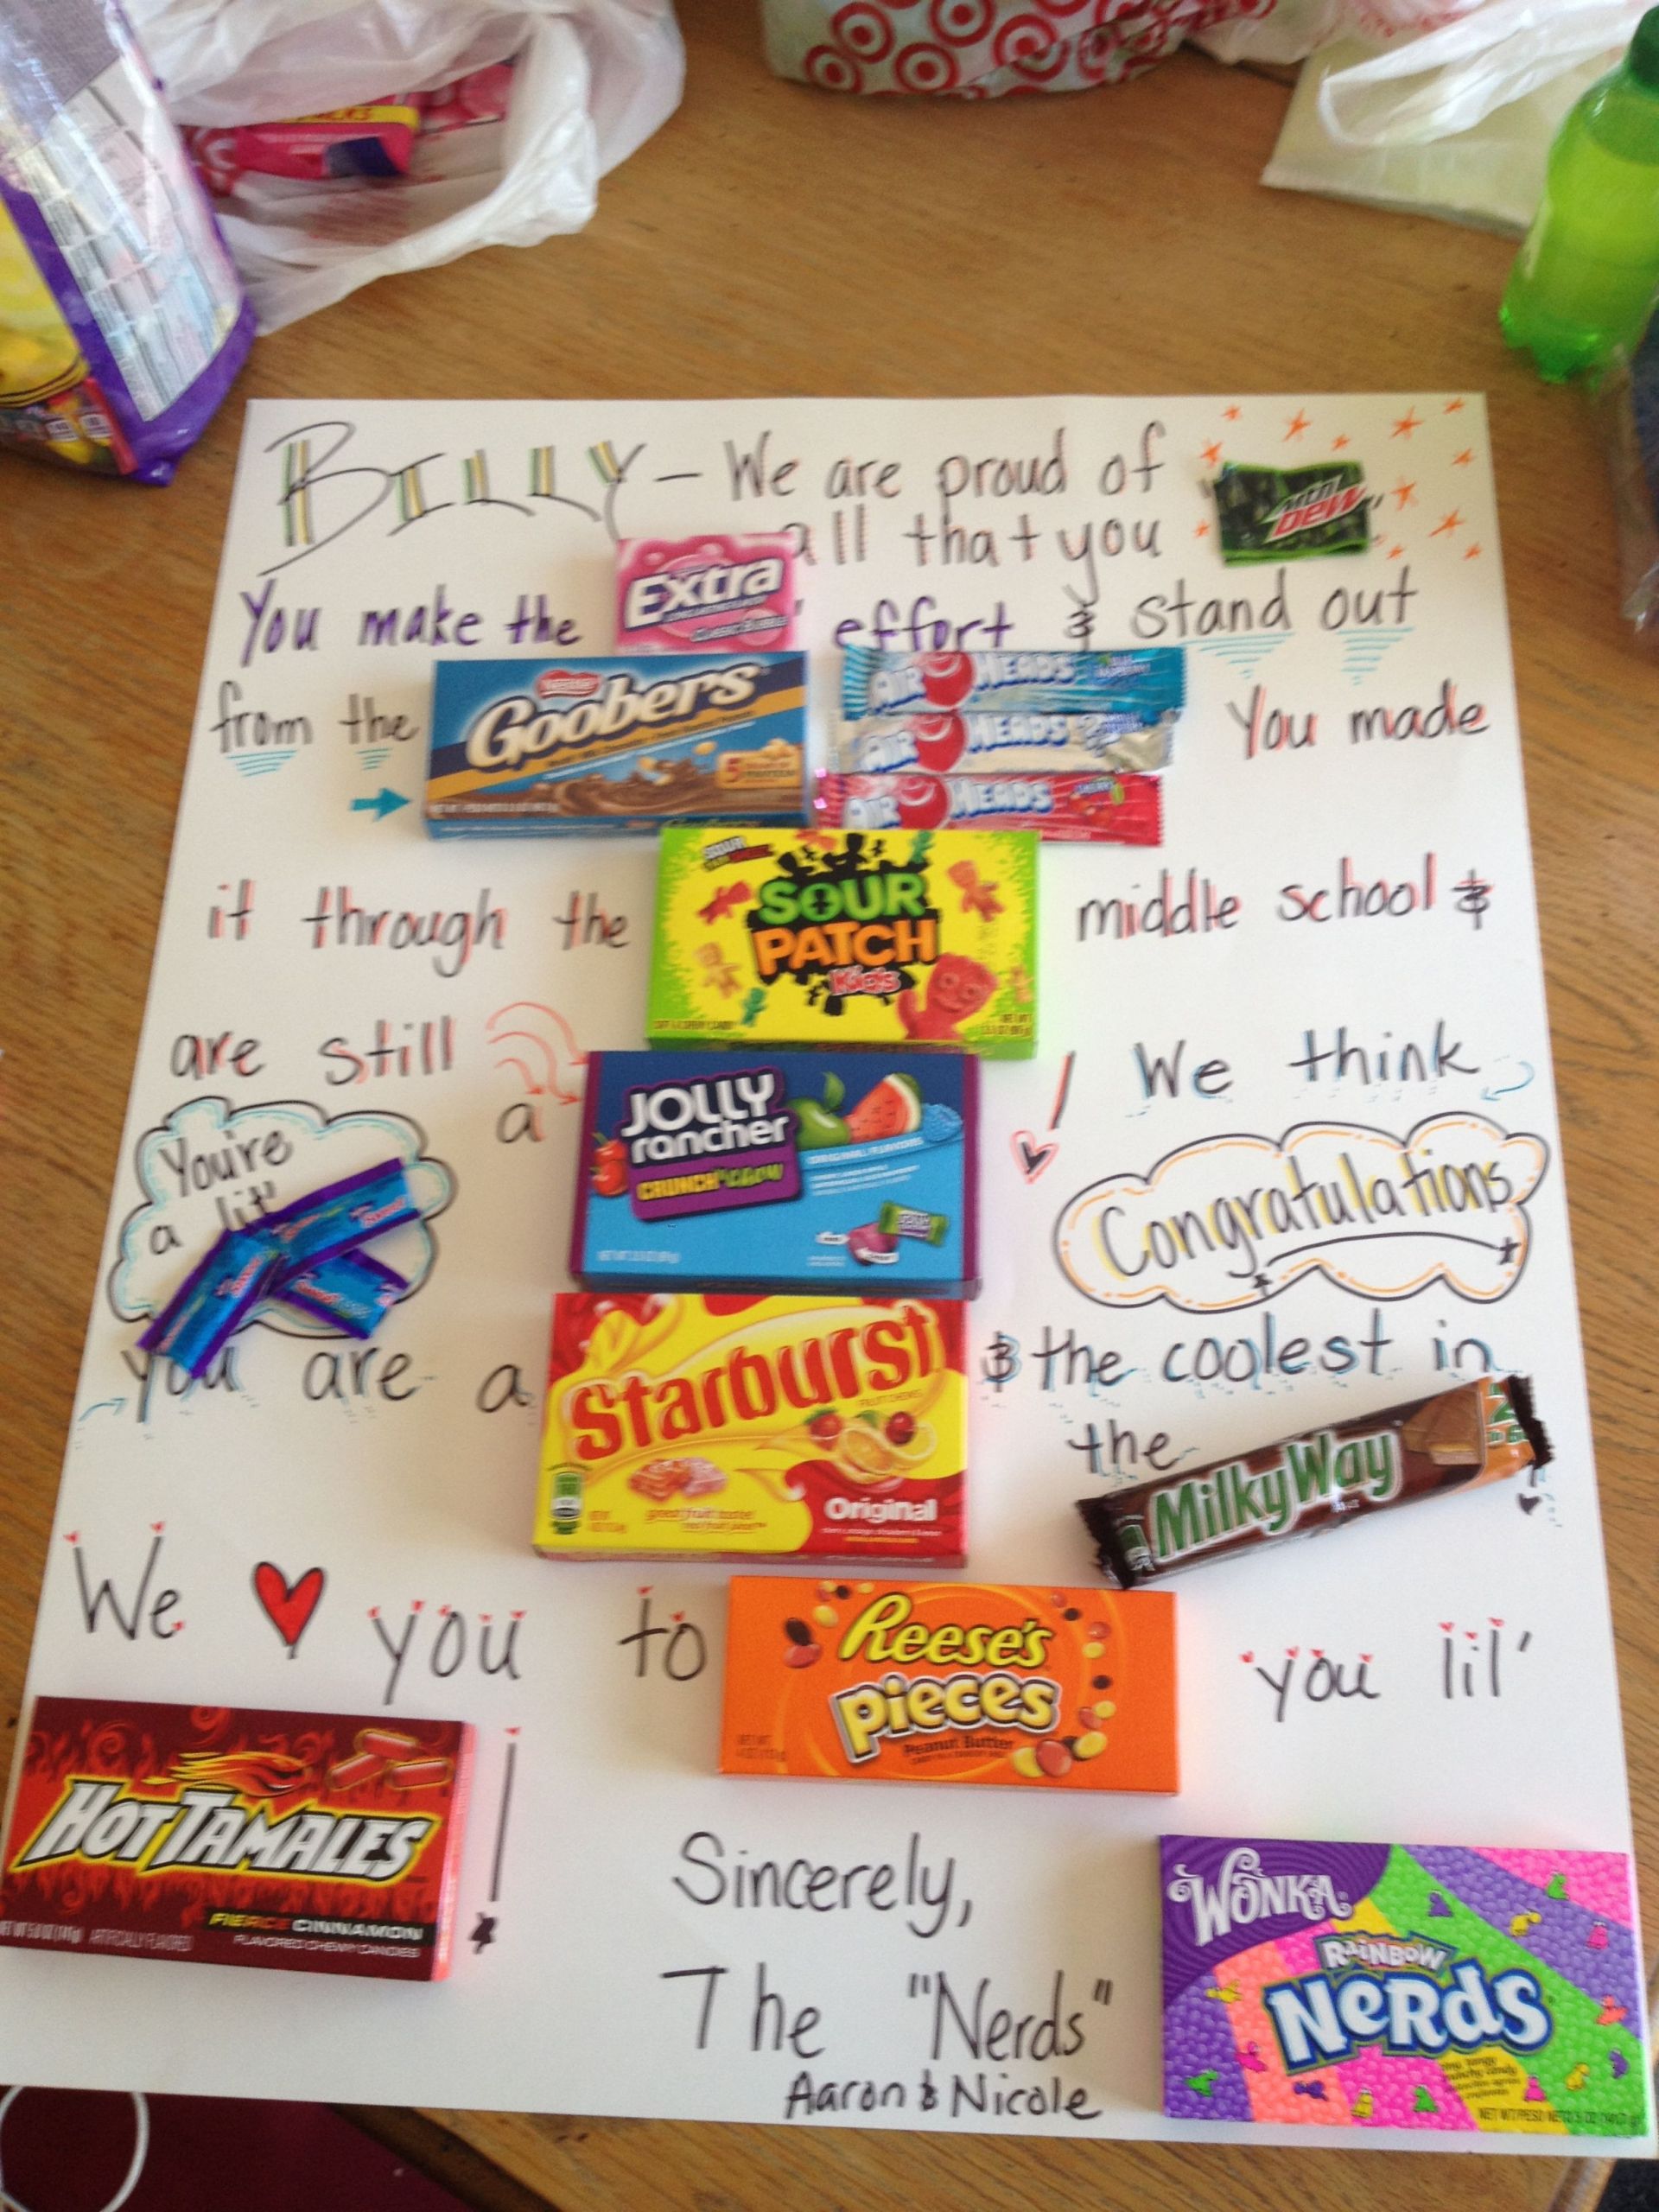 Grade School Graduation Gift Ideas
 A candy card for a boy promoting graduating middle school